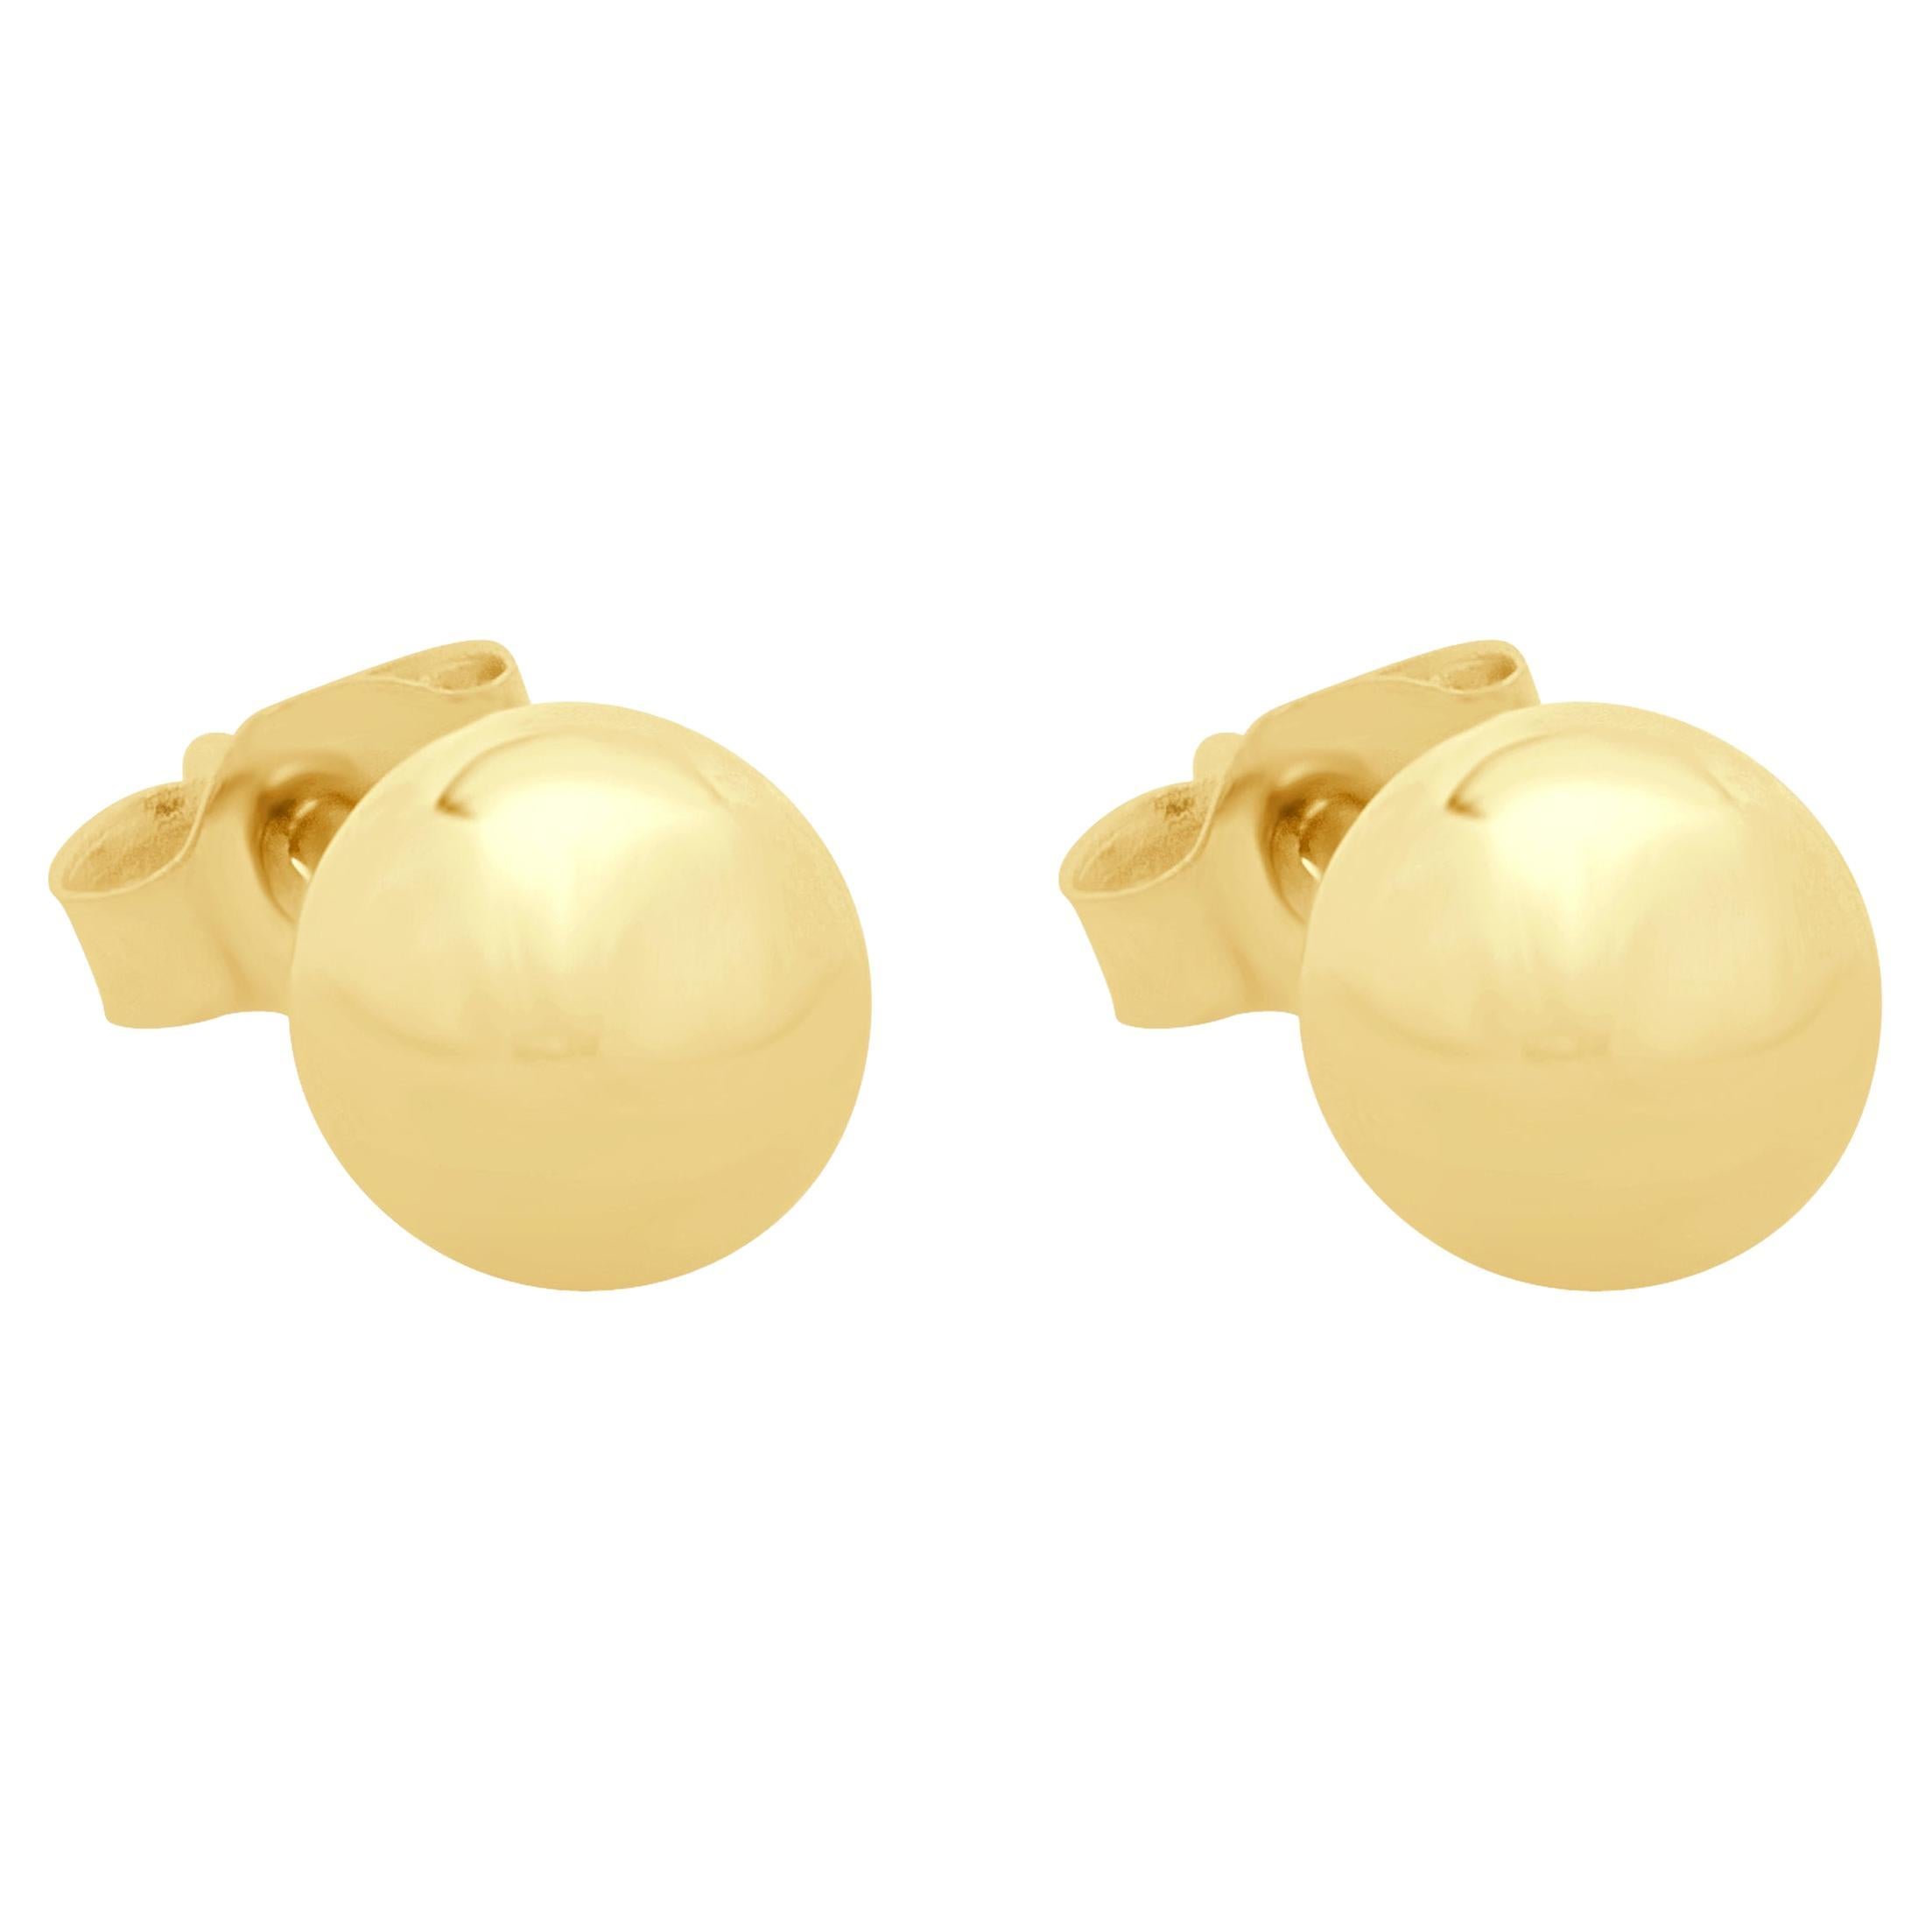 14 Karat Yellow Gold 5MM Ball Stud Earrings